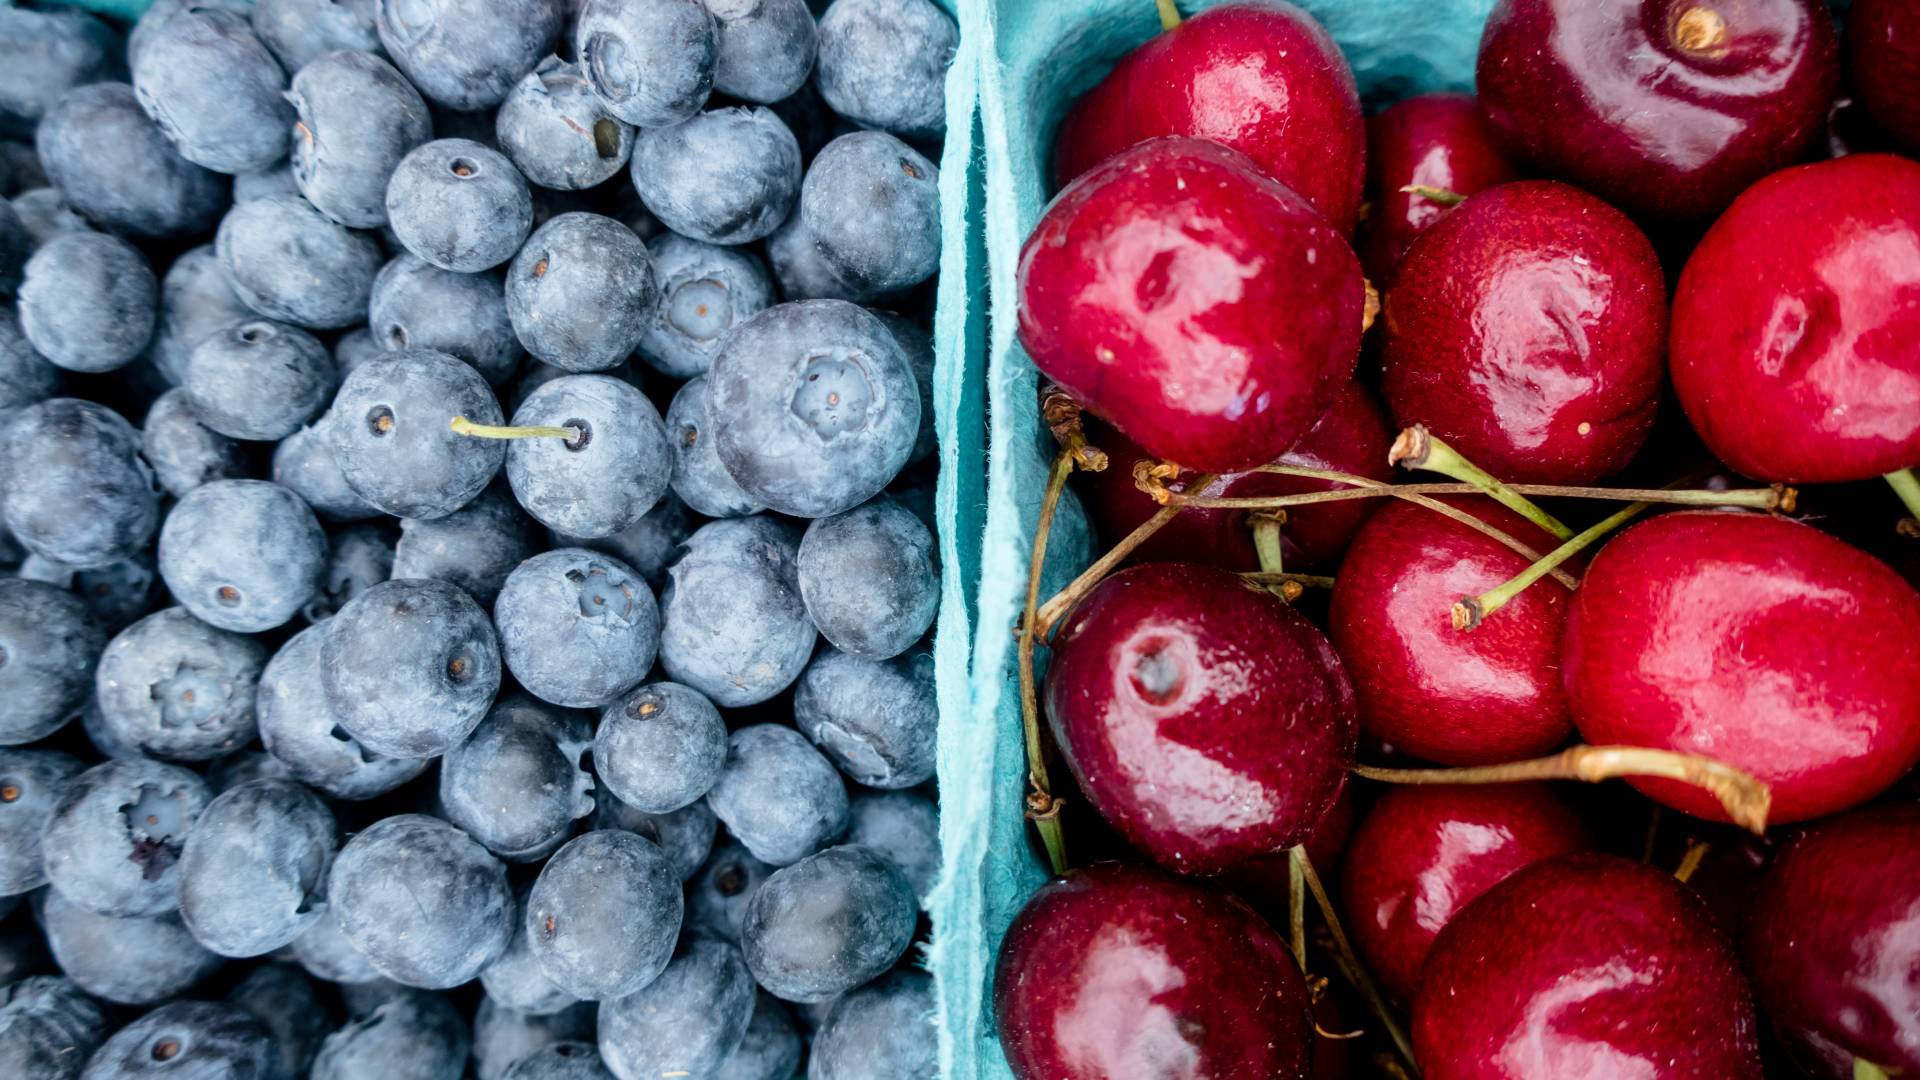 blueberries and cherries